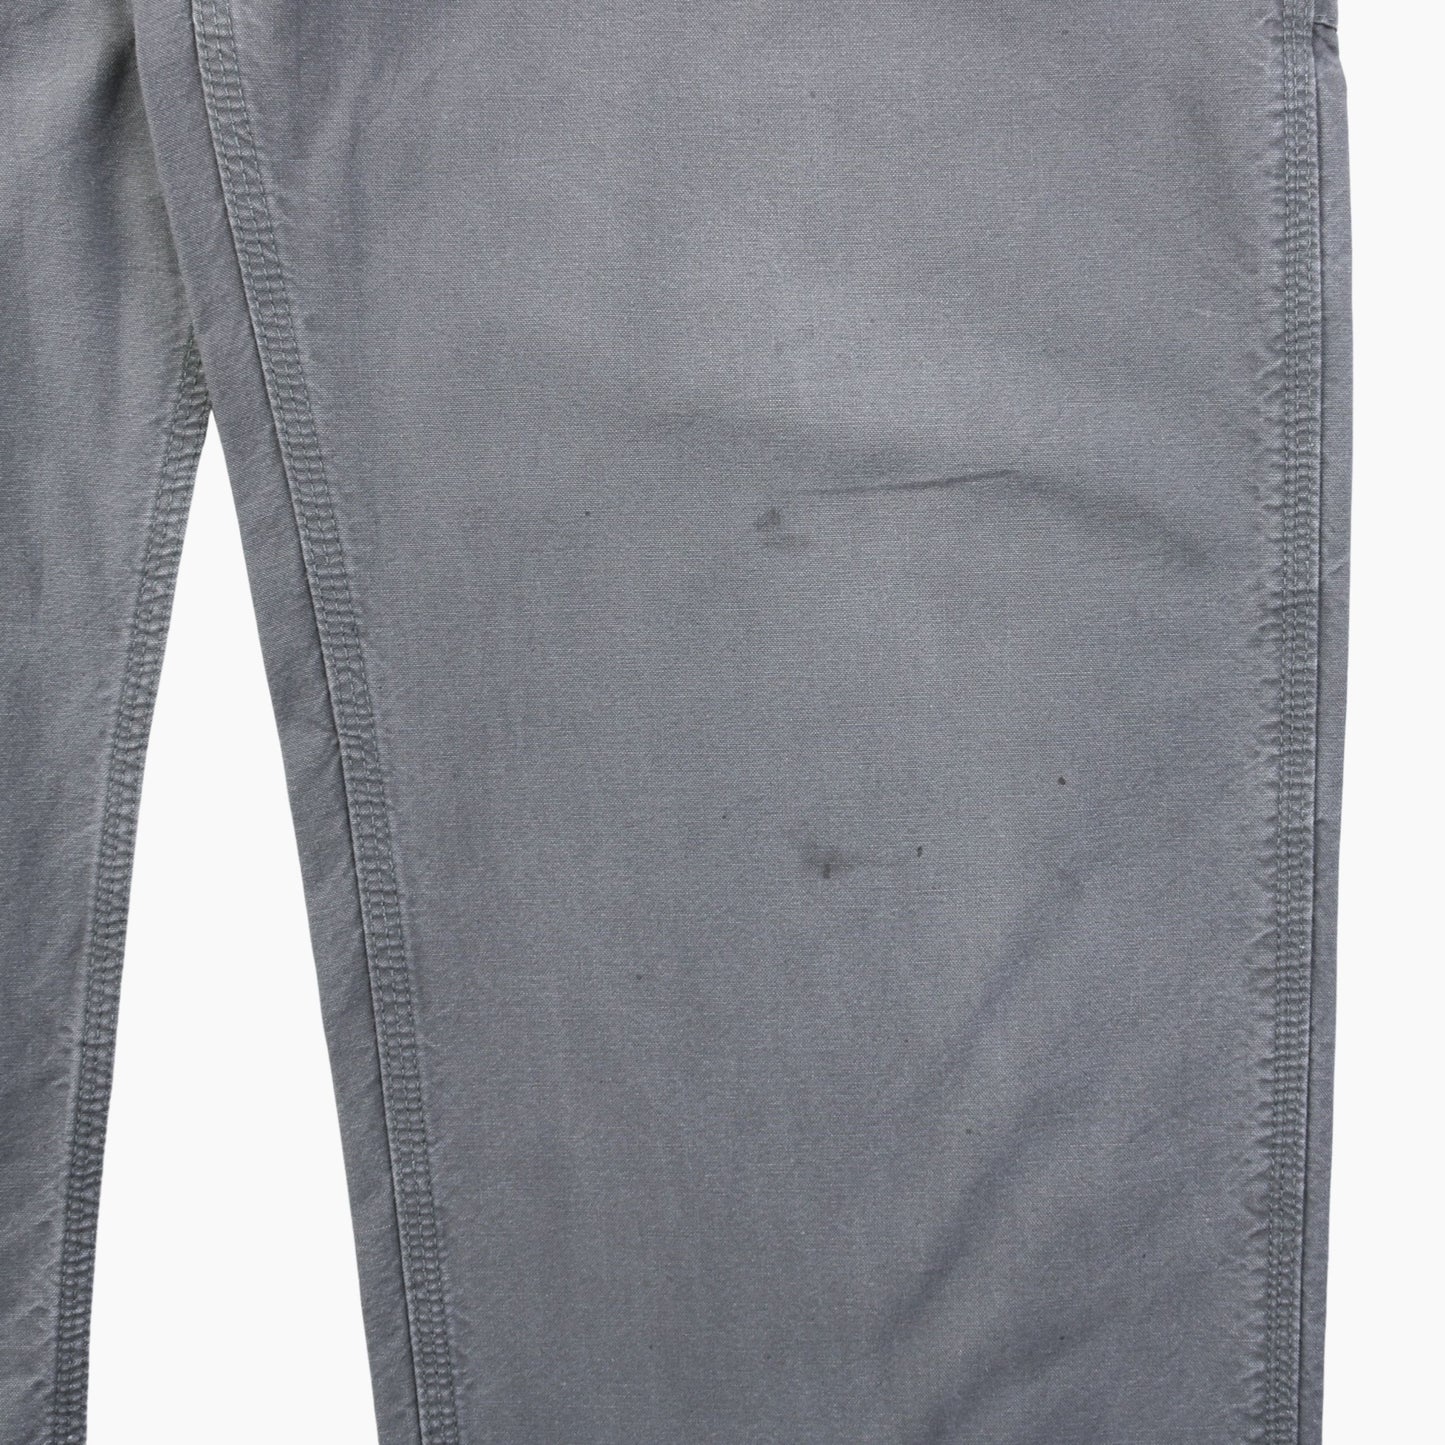 Vintage Carhartt Carpenter Pants - Grey - 38/36 - American Madness